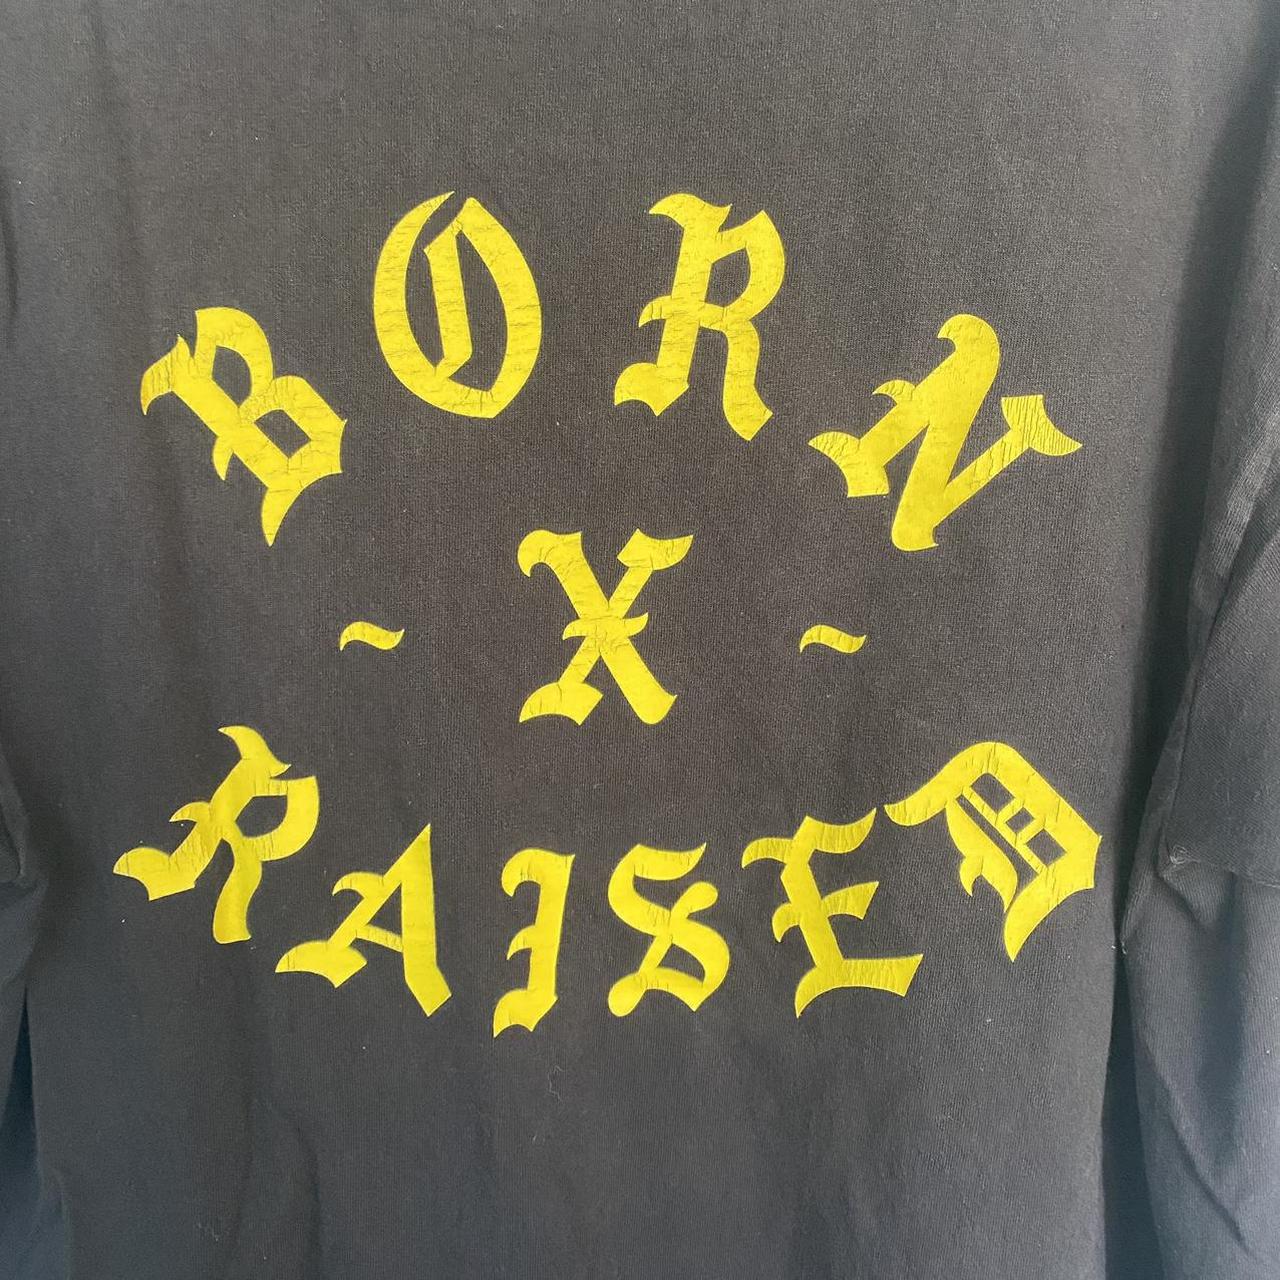 Born x Raised Men's Black and Yellow T-shirt (6)